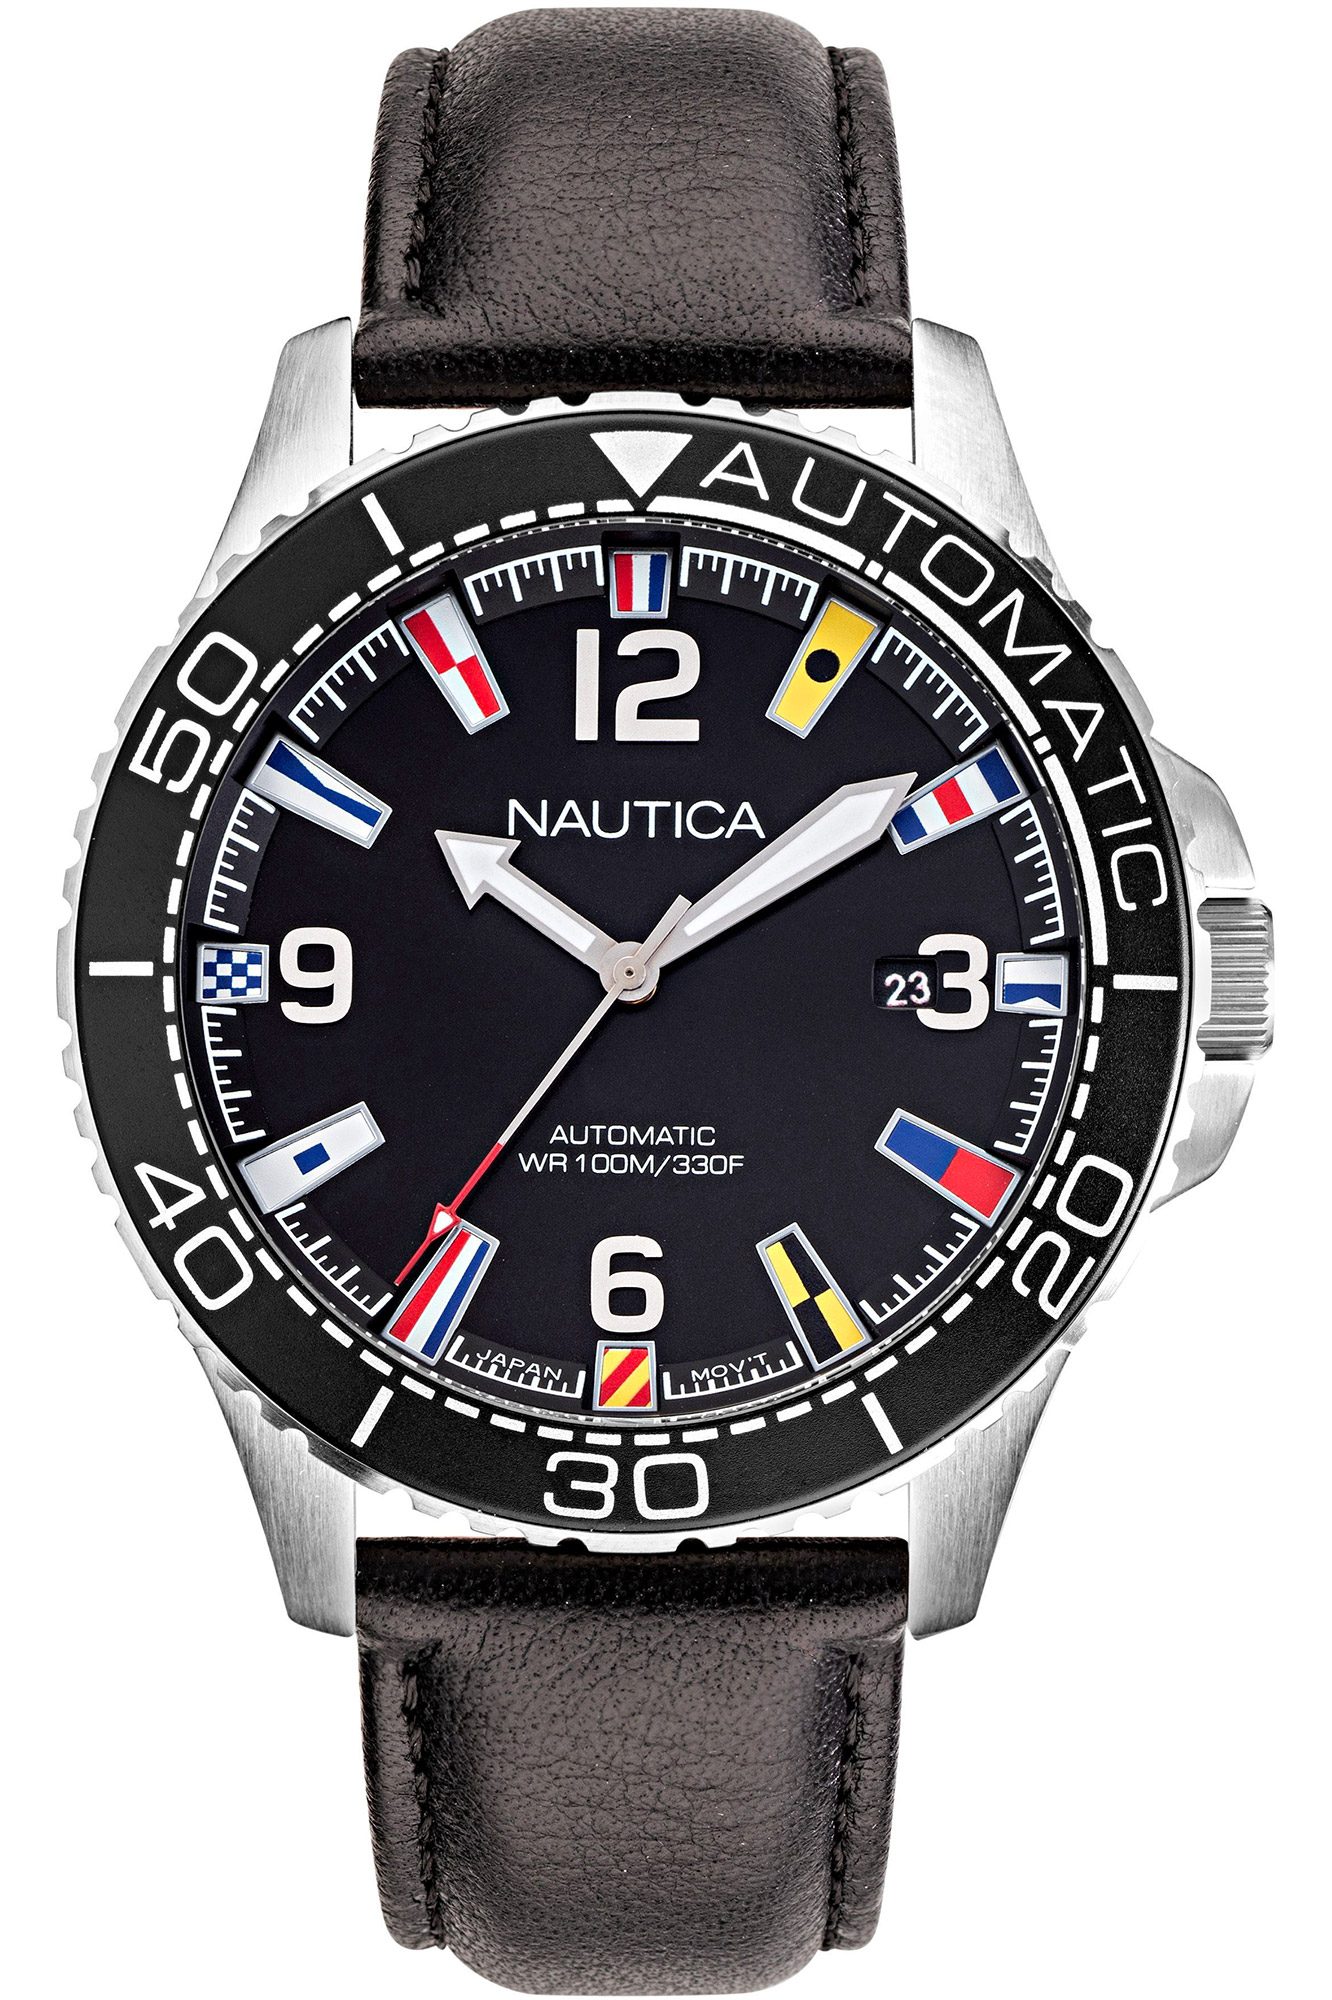 Reloj Nautica napjbf911